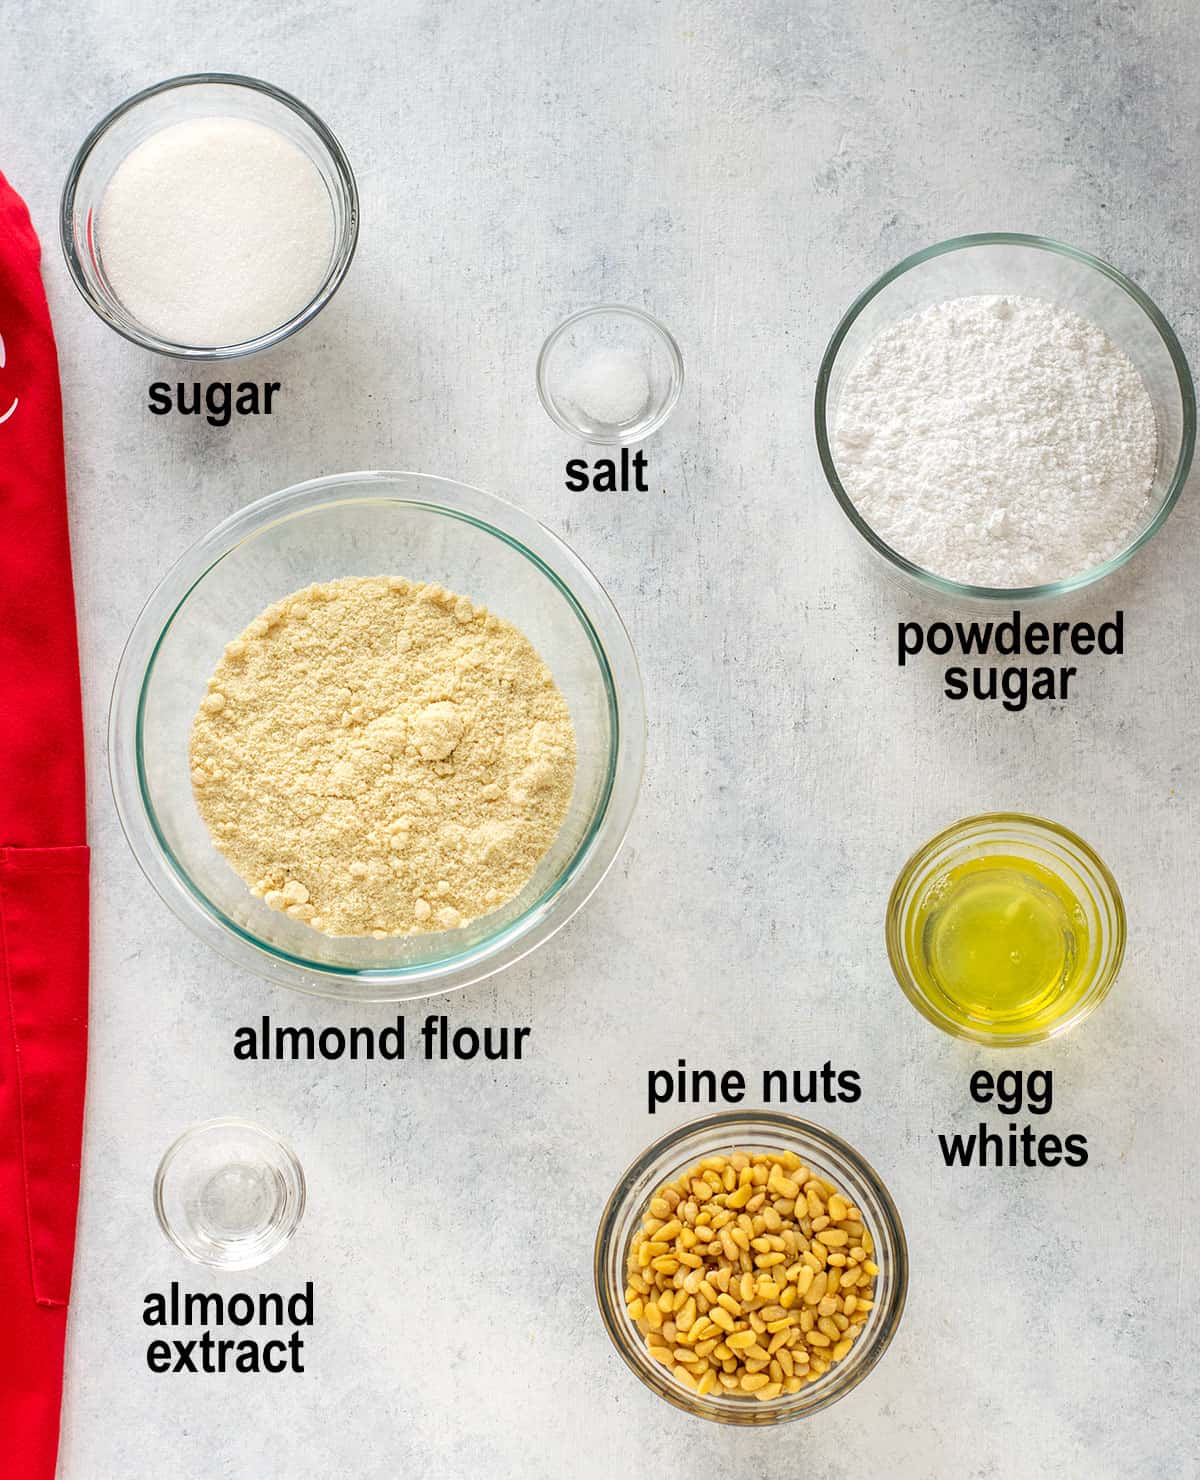 sugar, salt, powdered sugar, almond flour, egg whites, almond extract, pine nuts